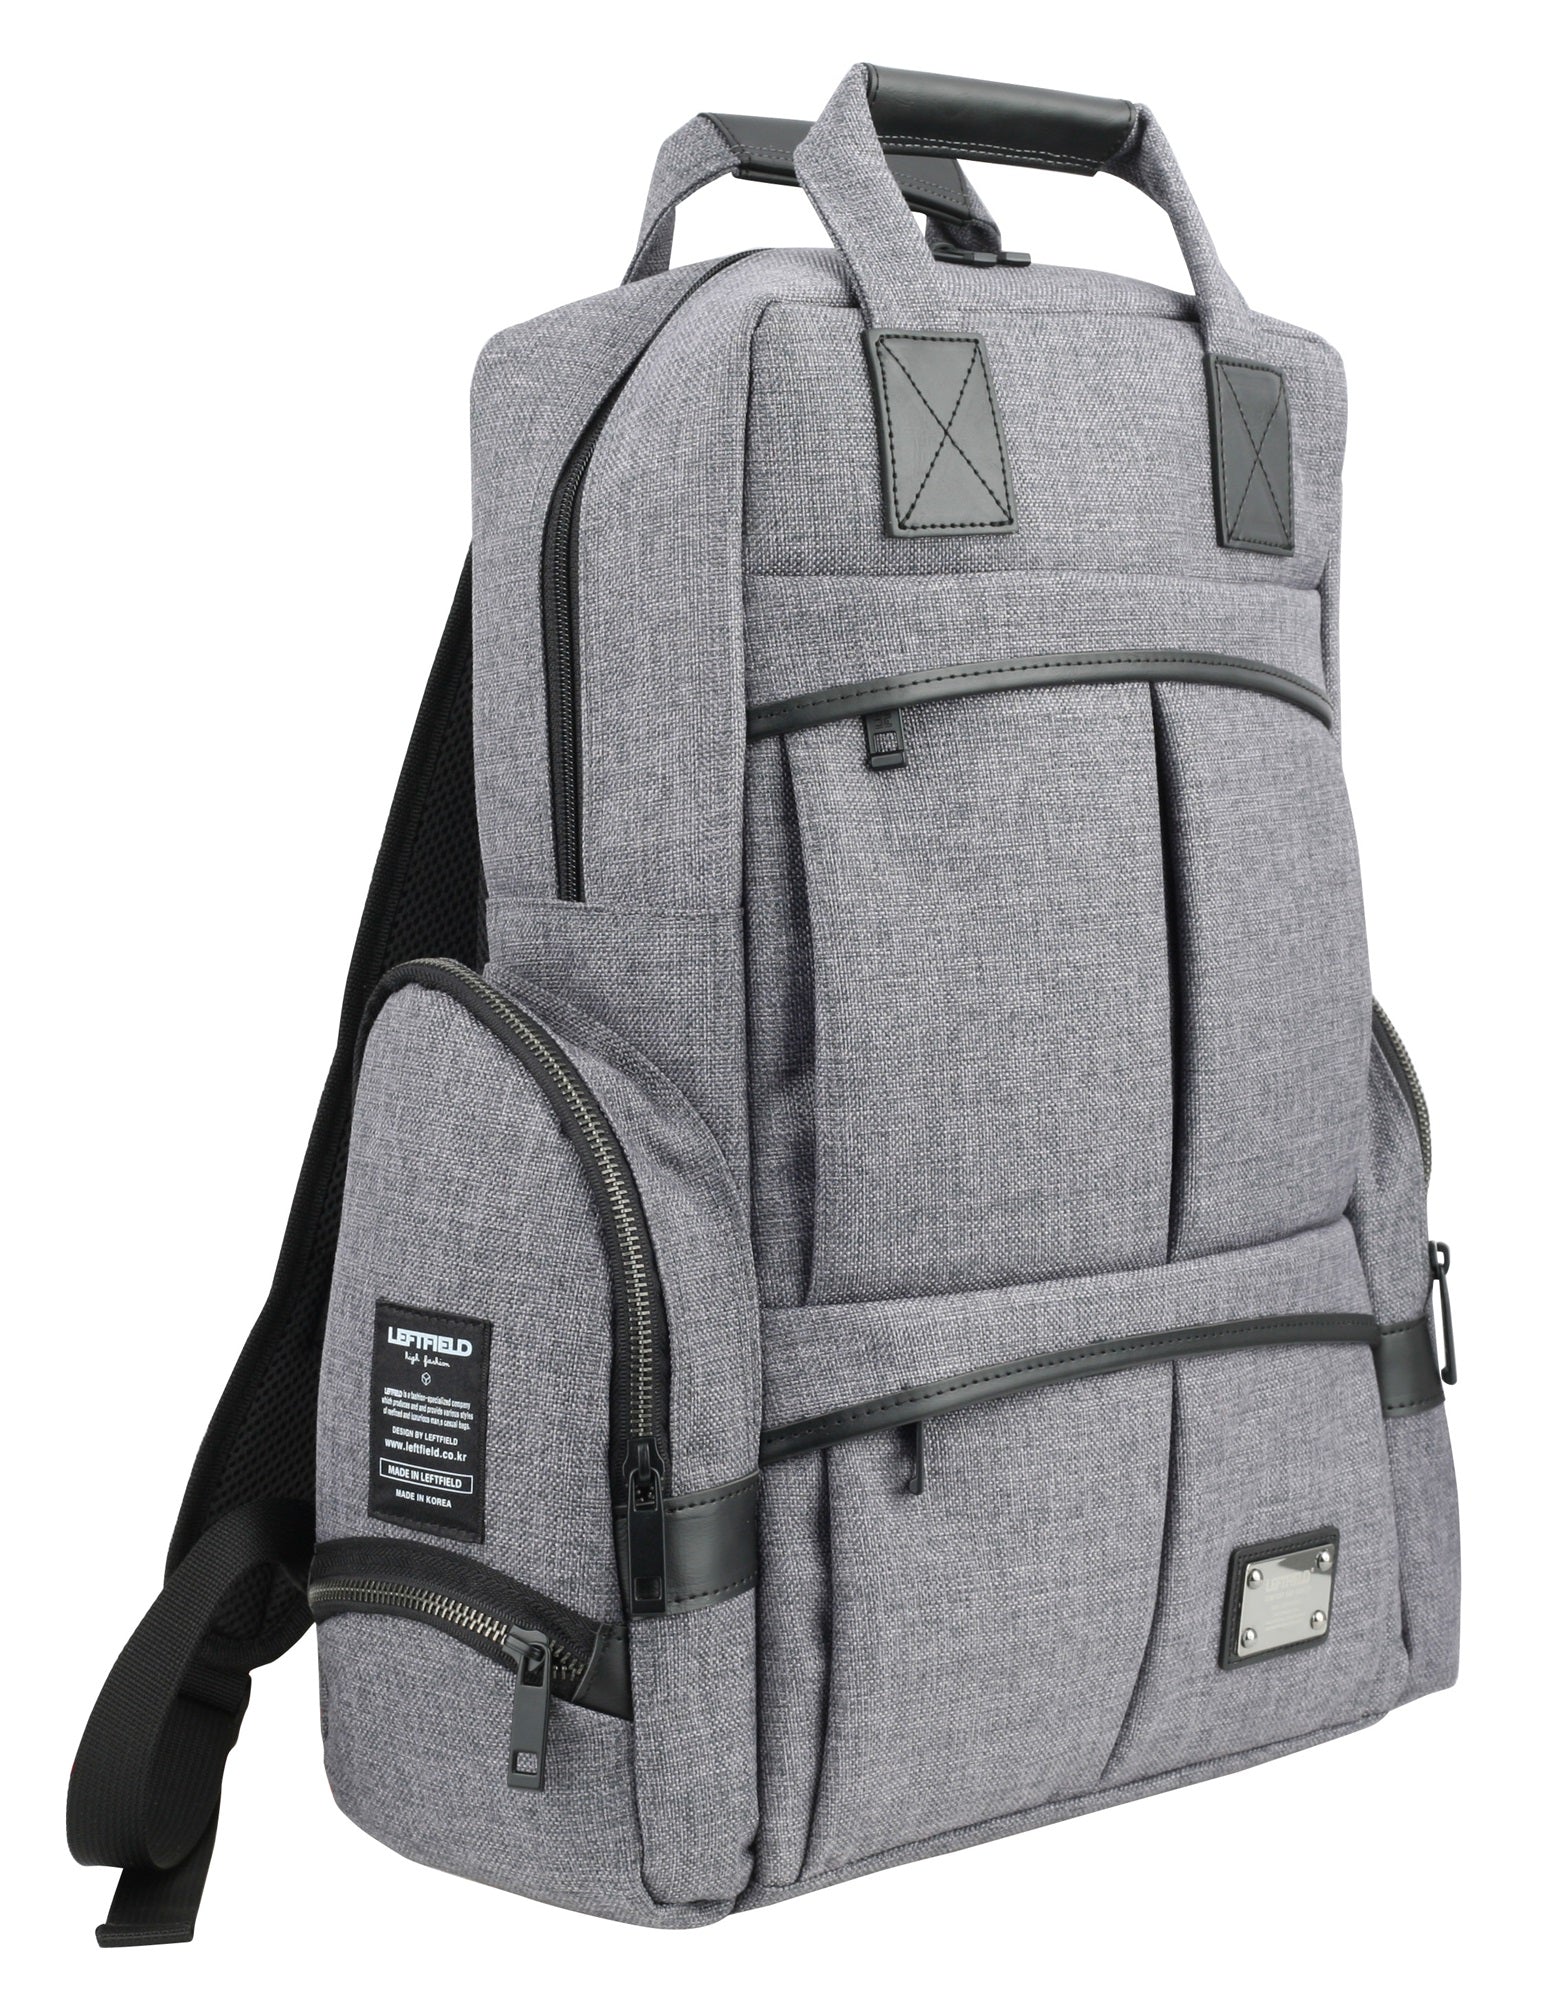 Gray Novelty Casual Canvas Backpacks